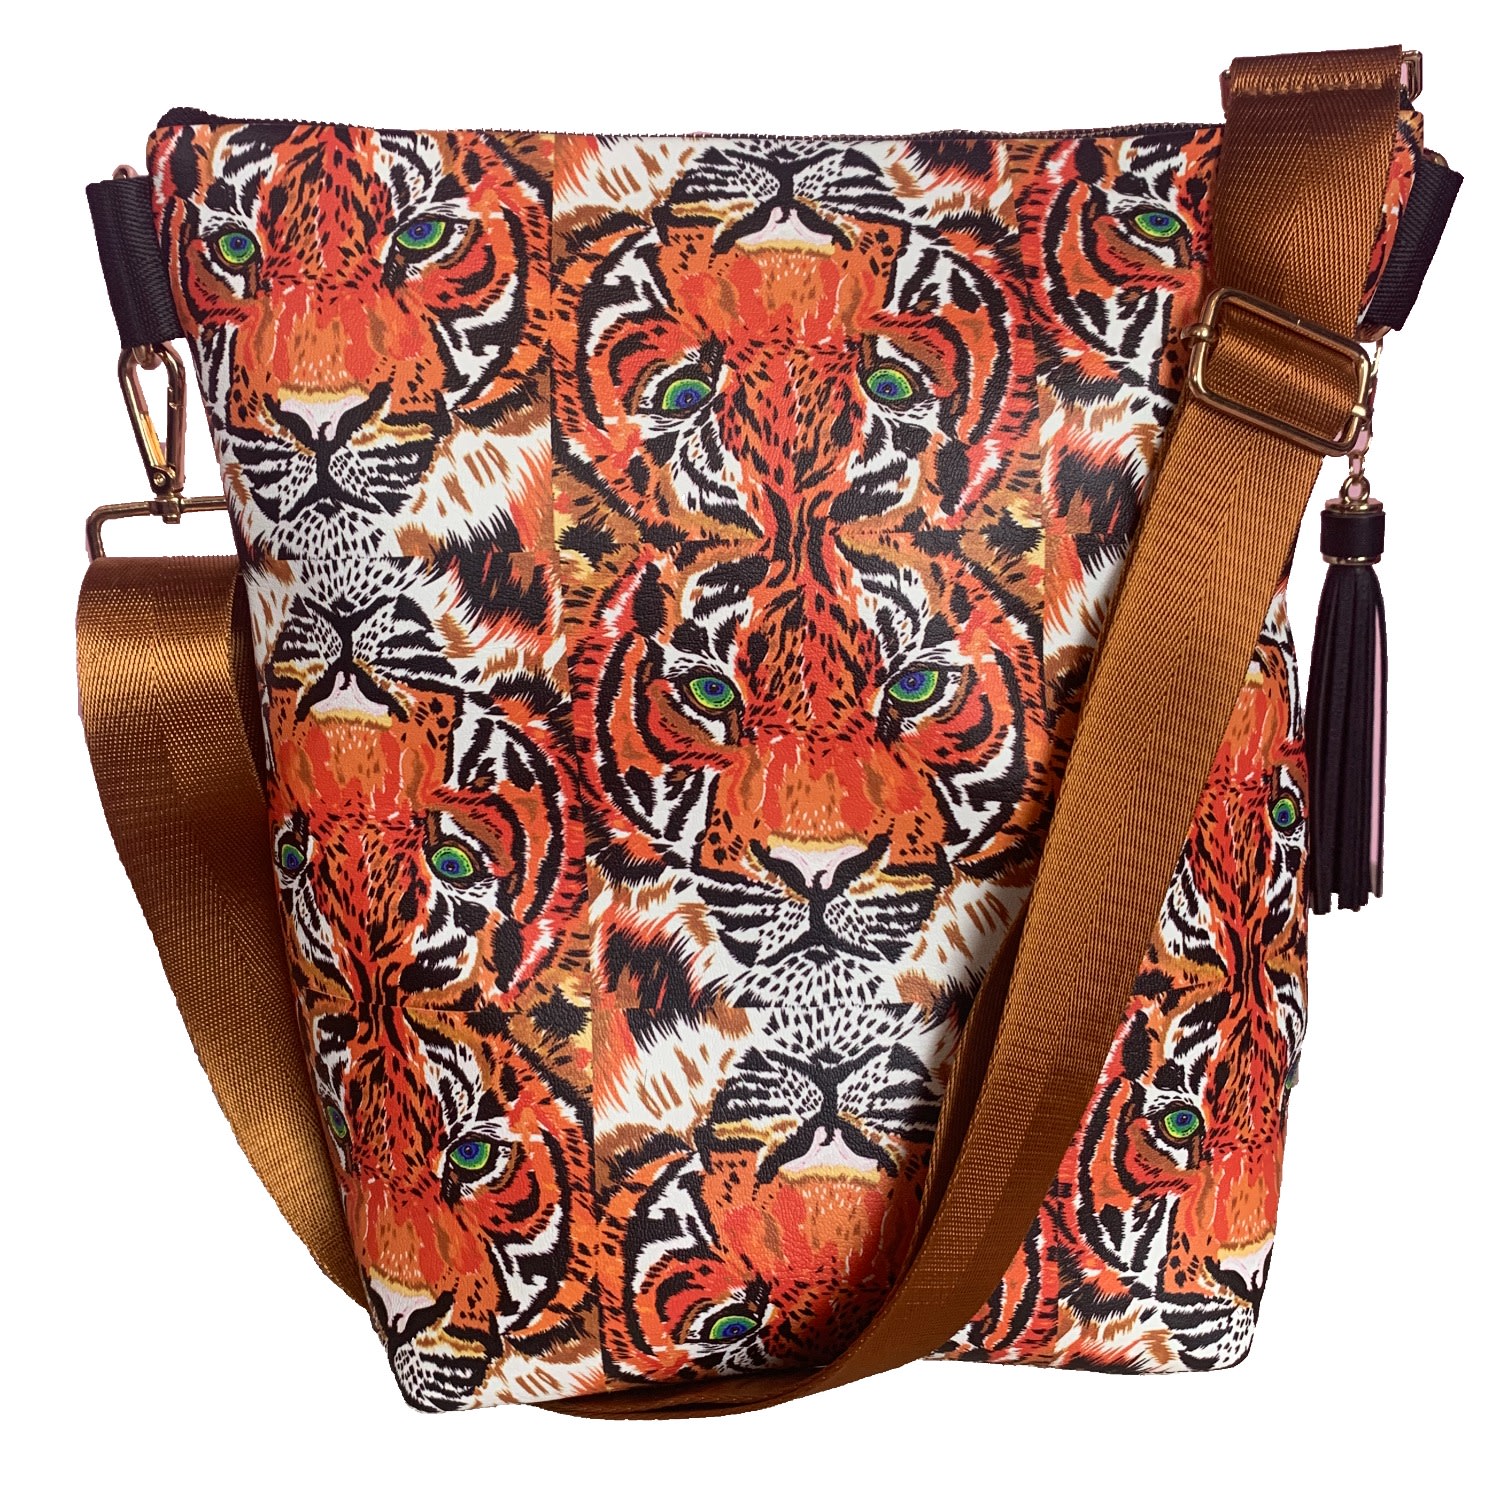 Chloe Croft London Limited - Tiger Repeat Vegan Leather Handbag